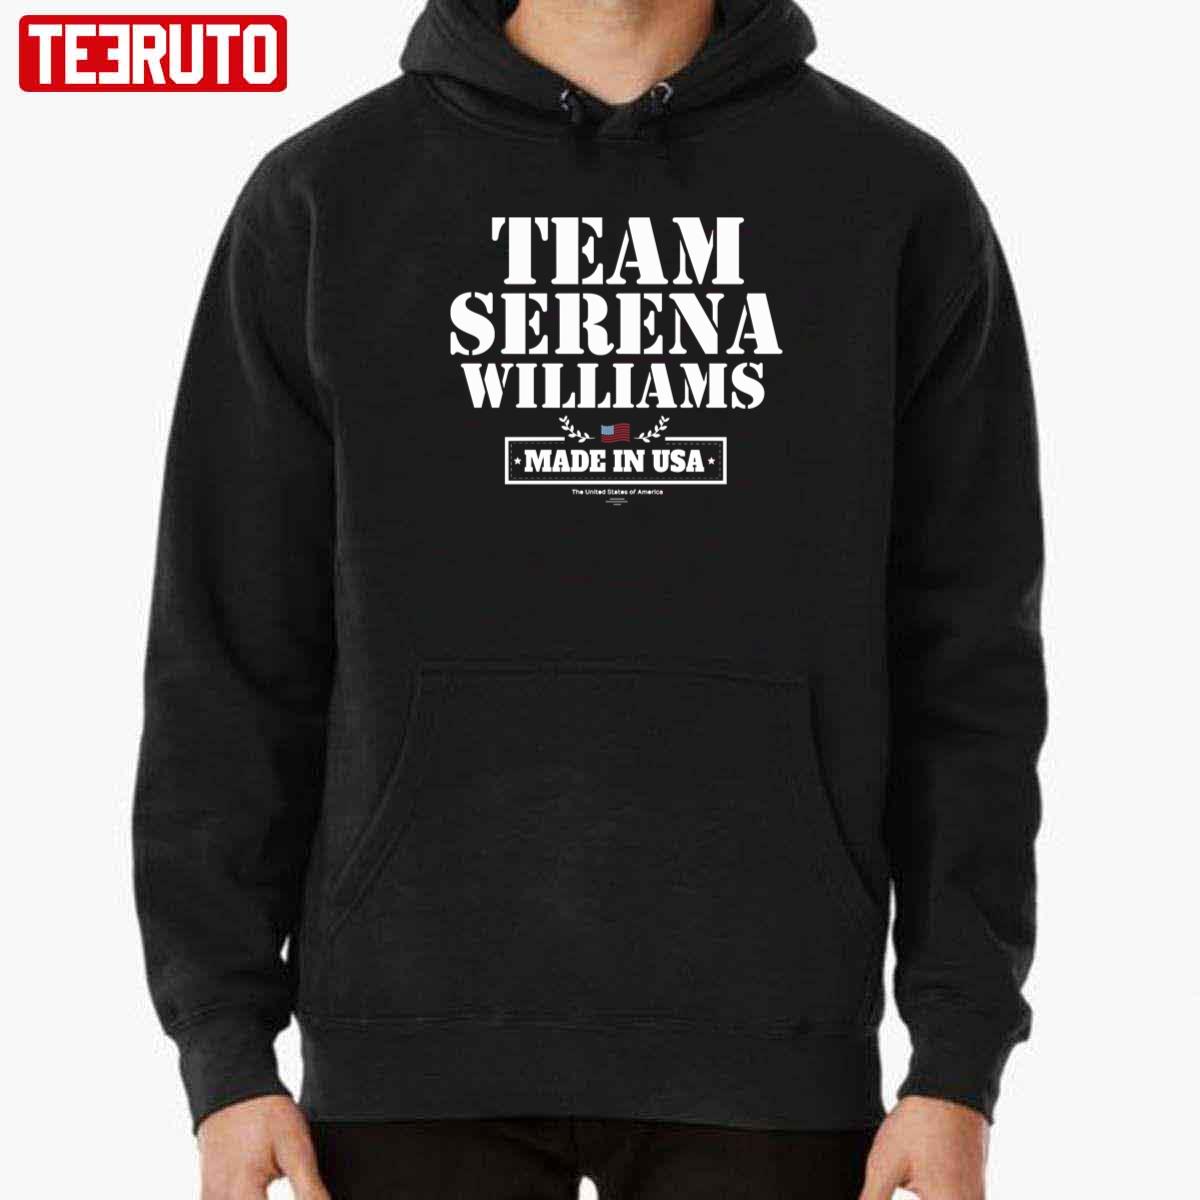 Serena Williams Tennis Made In USA Unisex T-Shirt